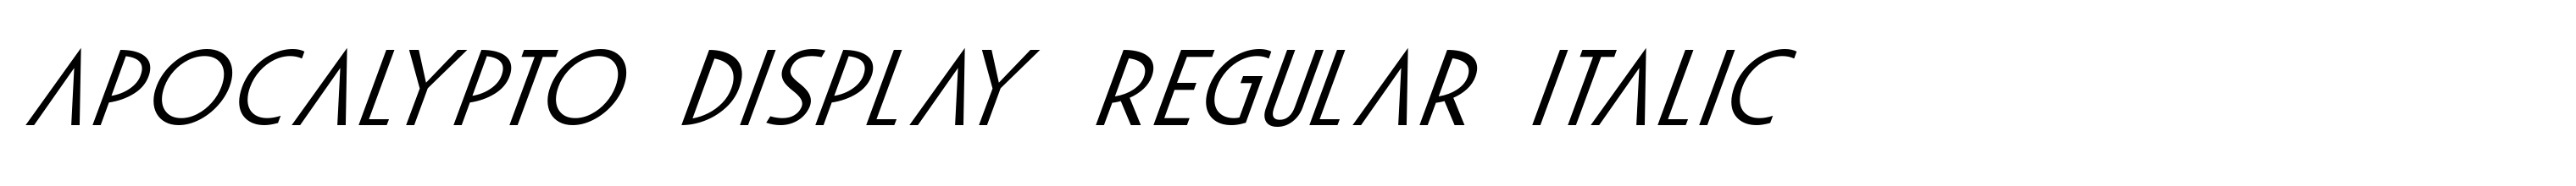 Apocalypto Display Regular Italic